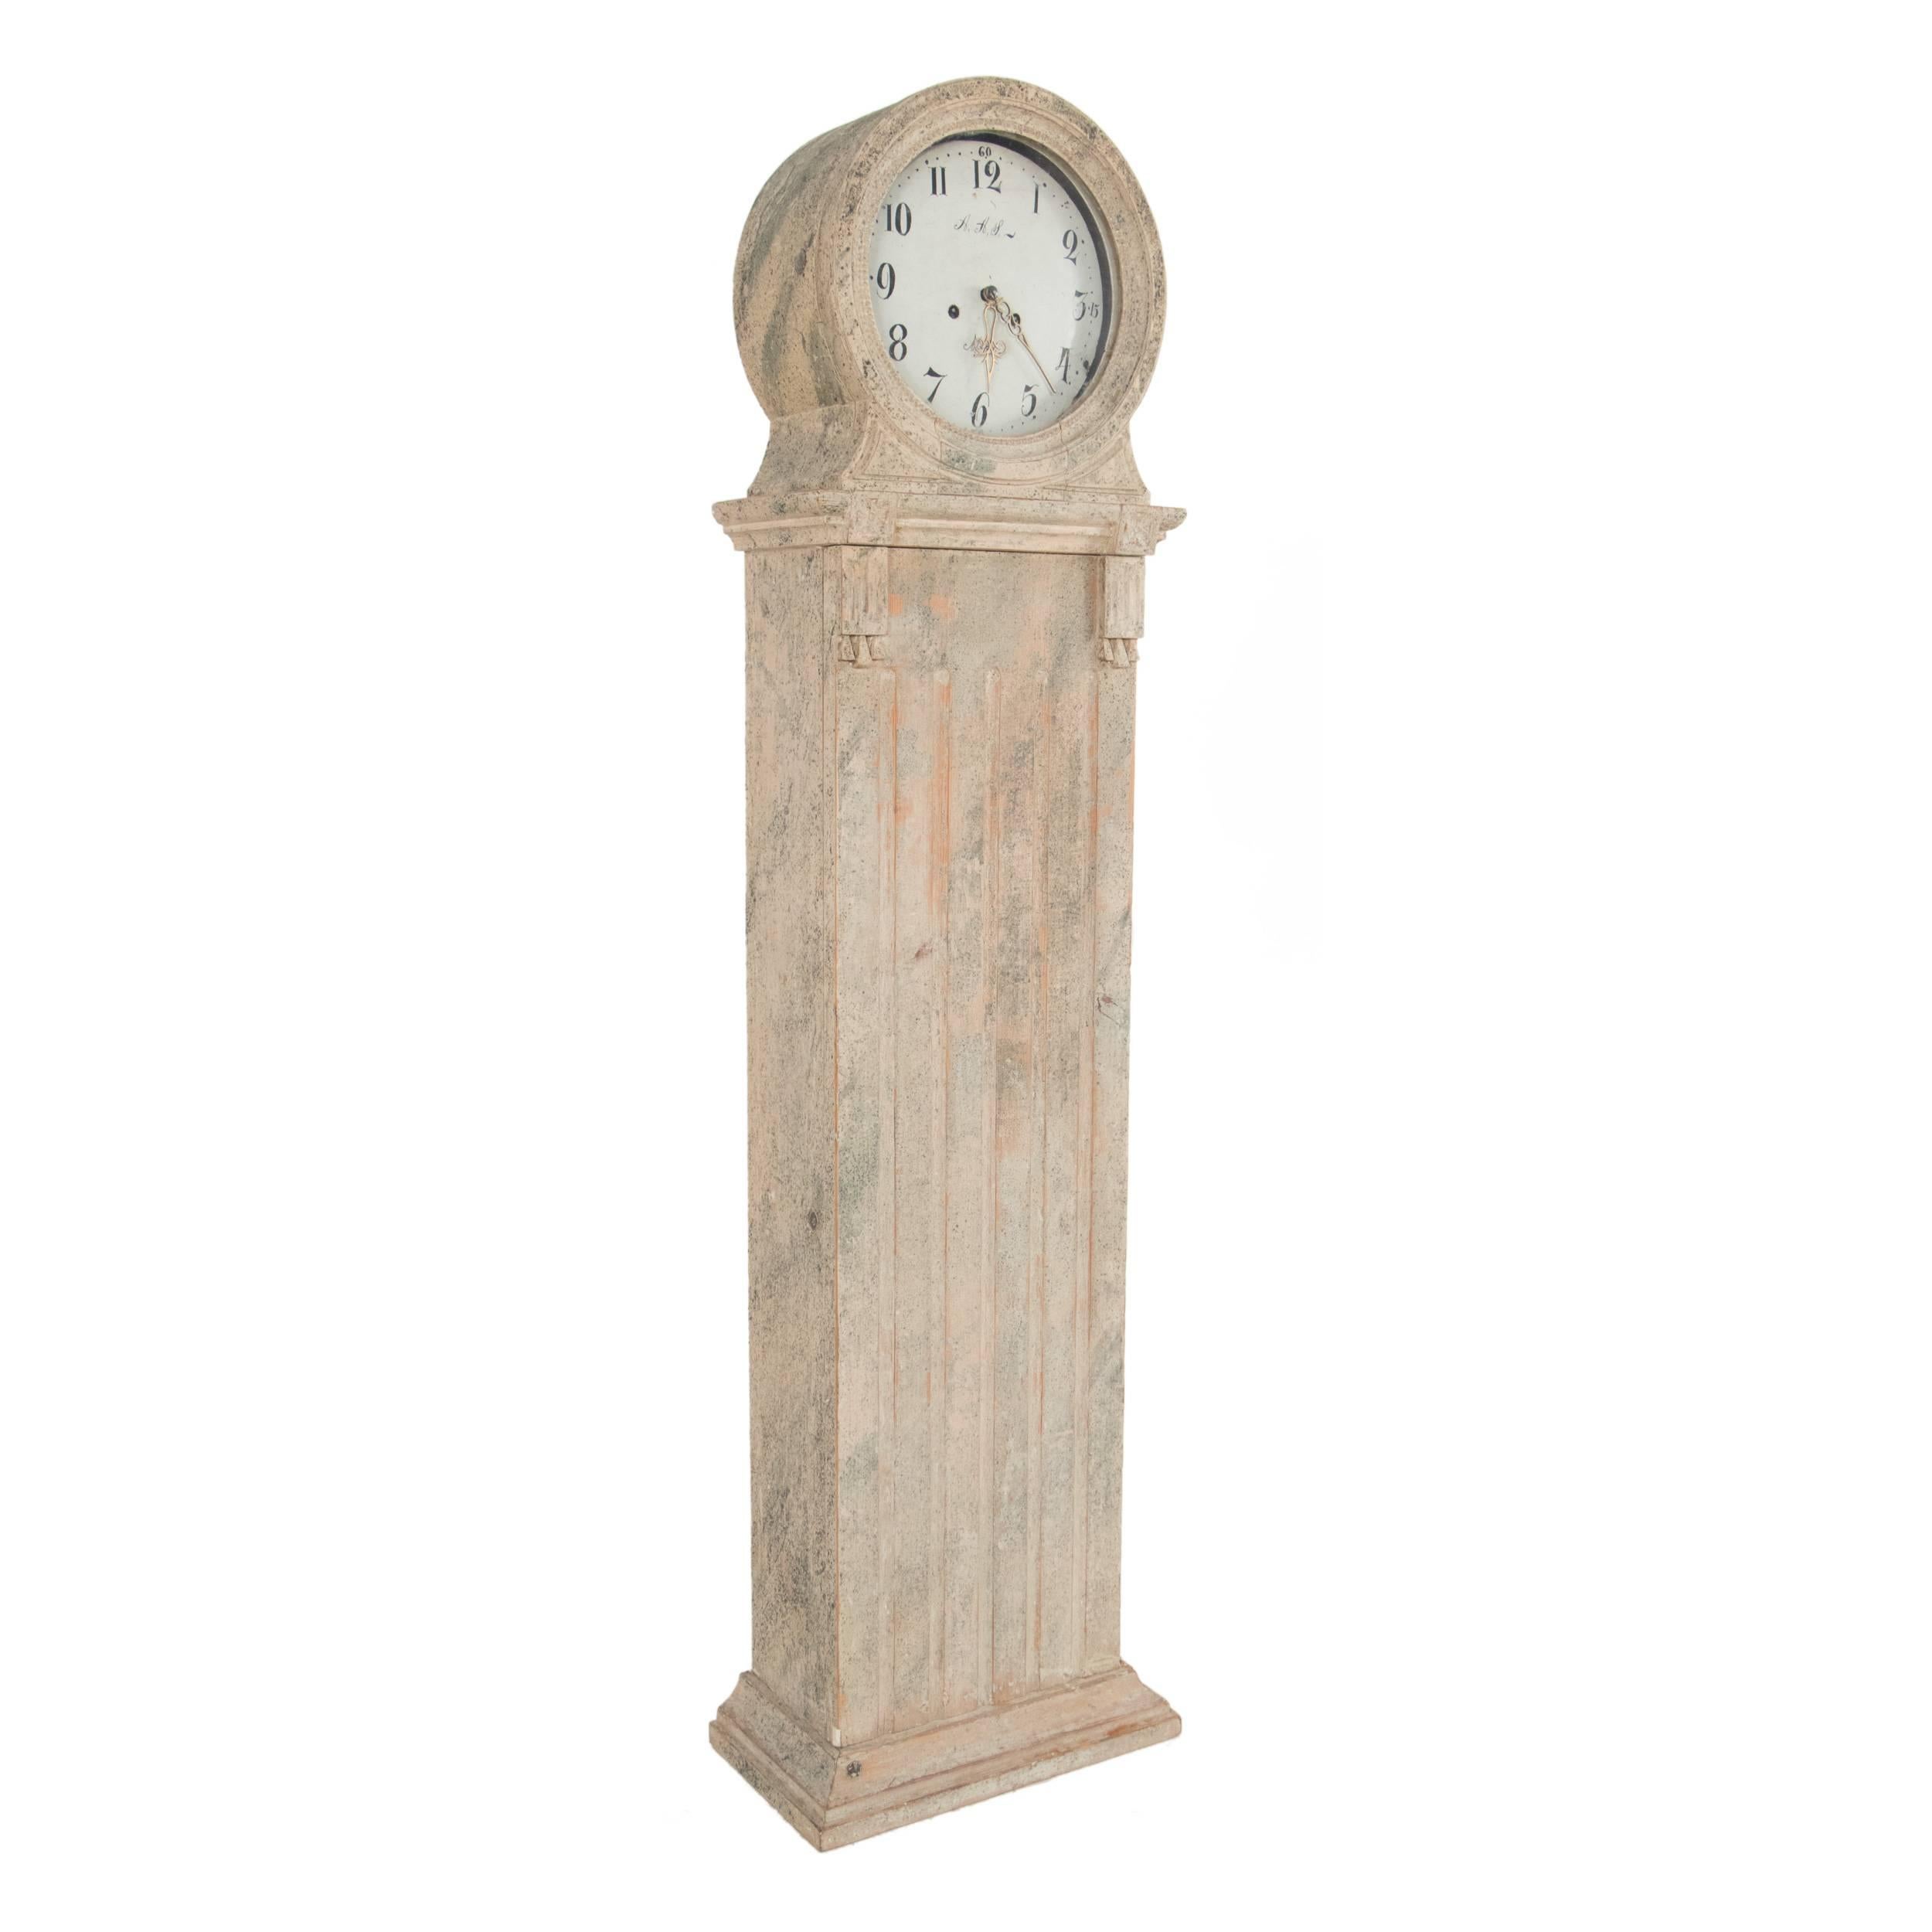 Gustavian grandfather clock in a worn pale marbleized patina.